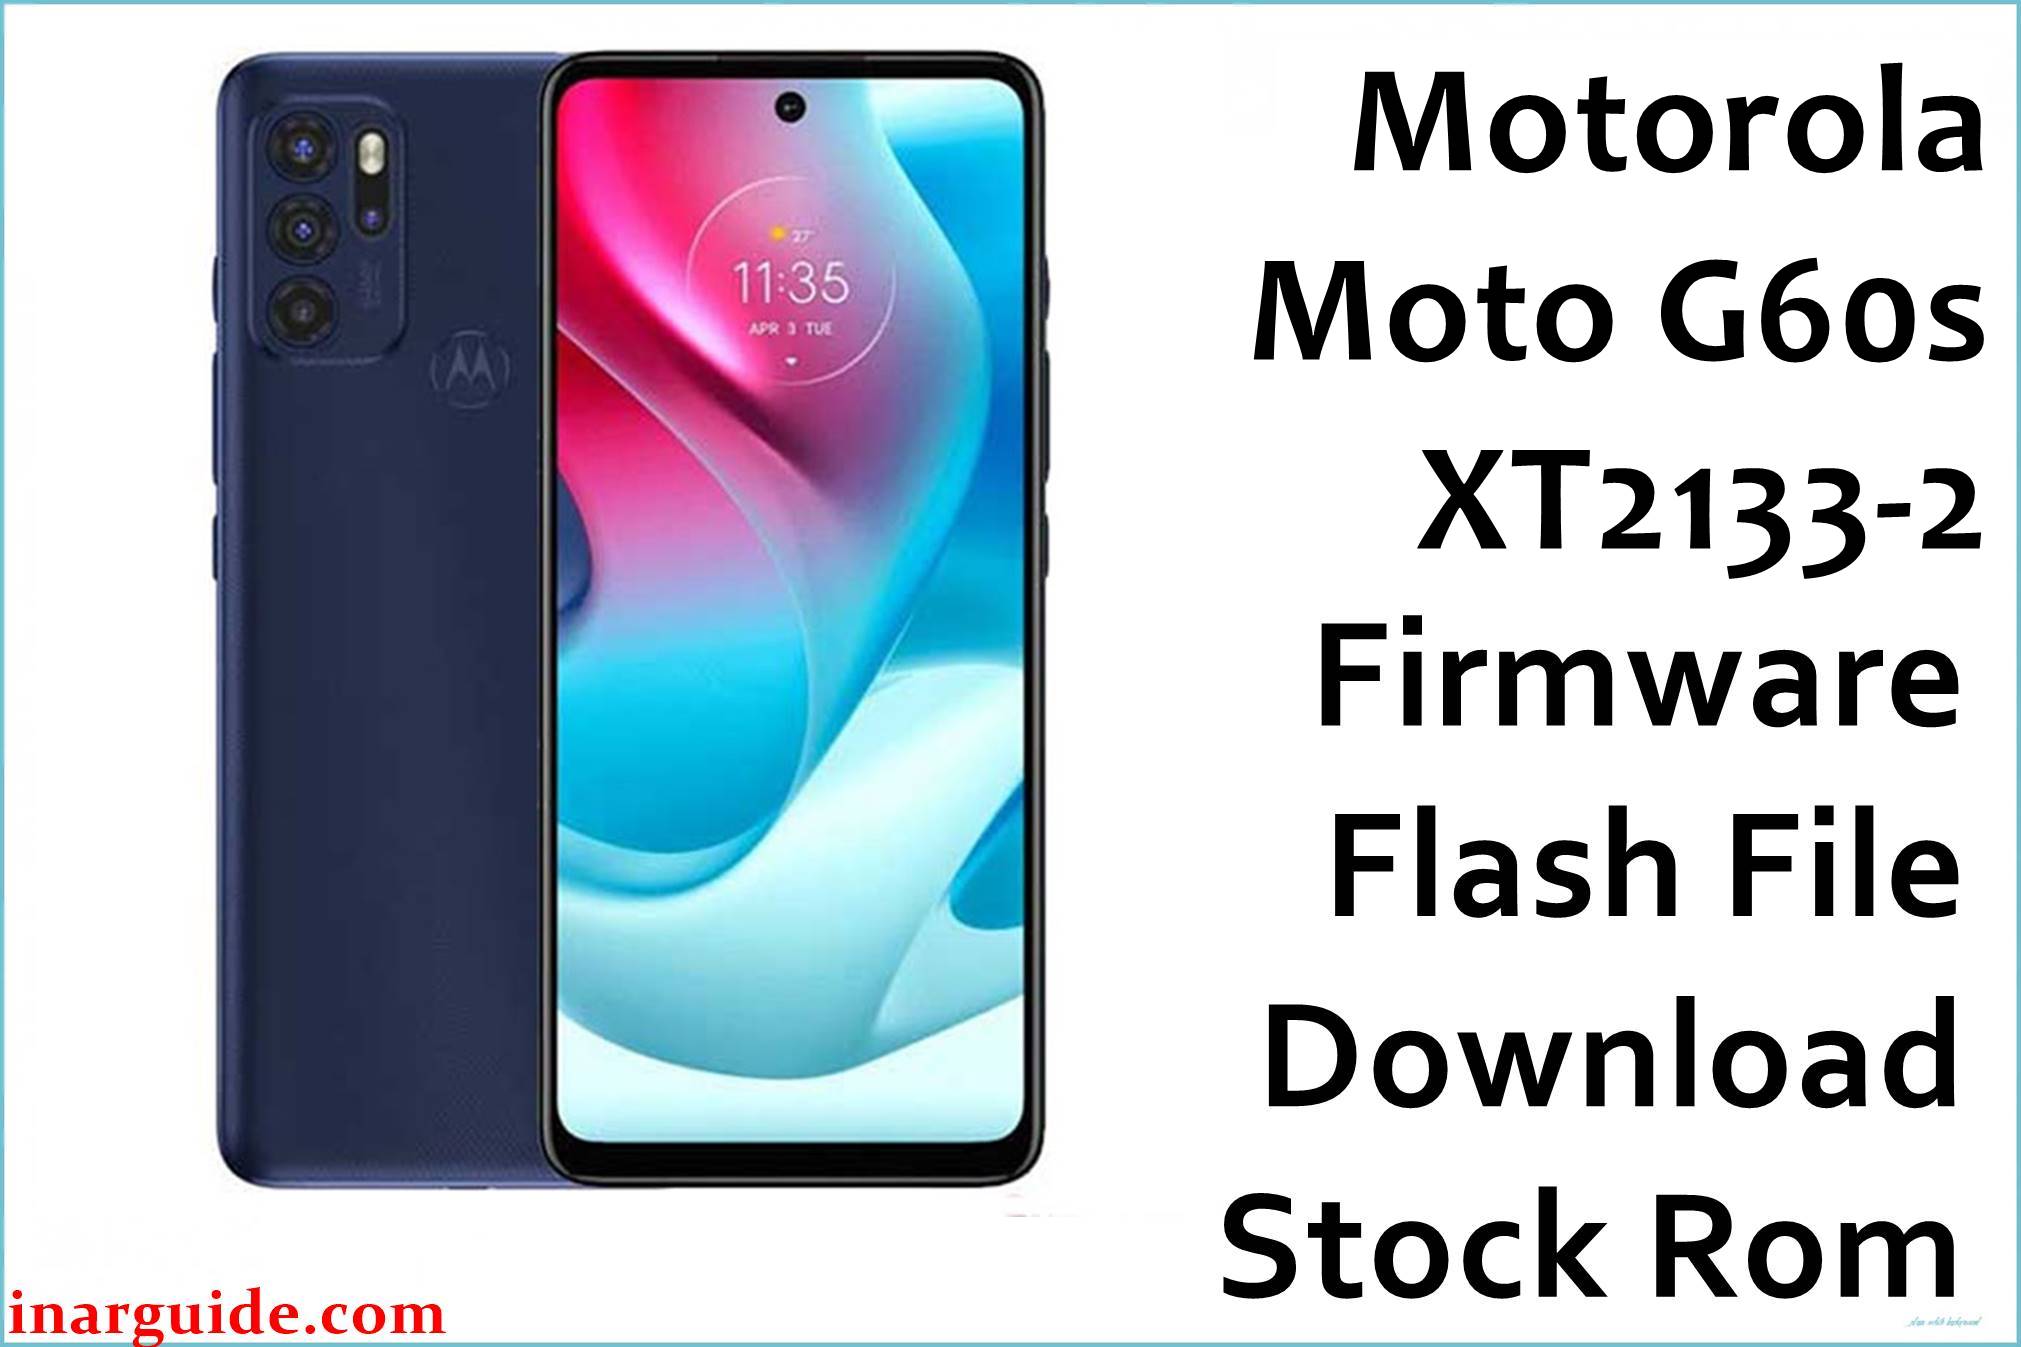 Motorola Moto G60s XT2133-2